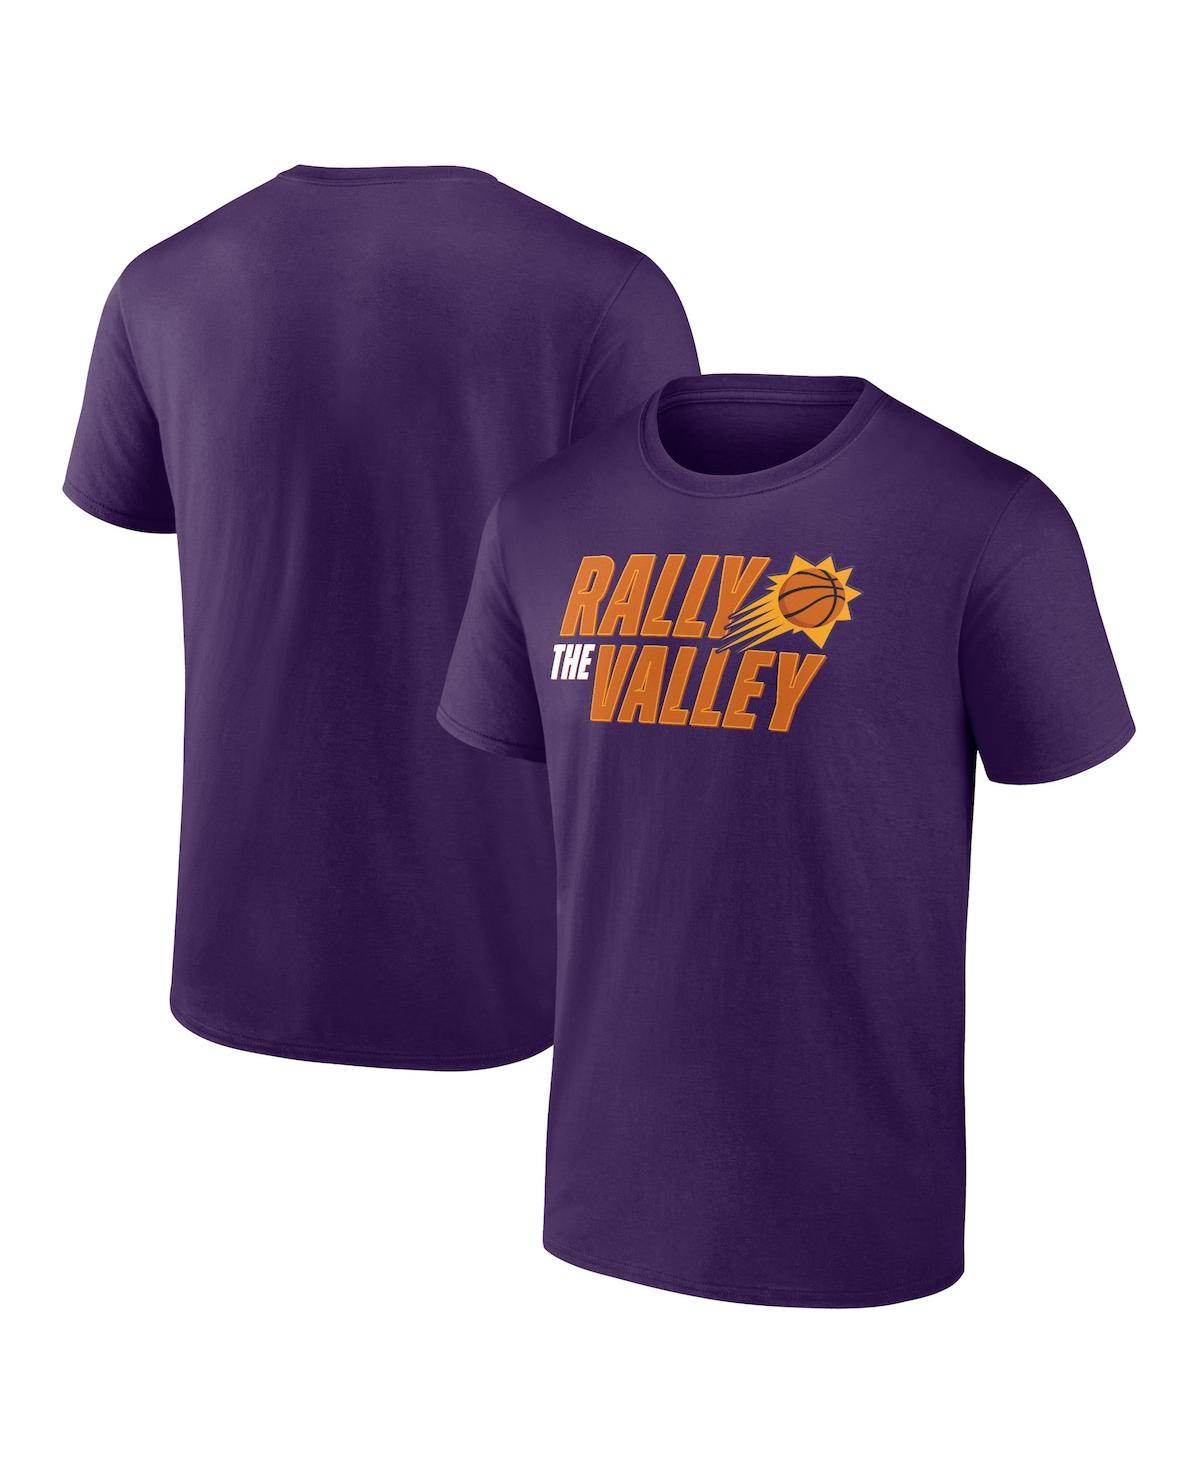 Shop Fanatics Men's  Purple Phoenix Suns Hometown Collection Rally The Valley T-shirt